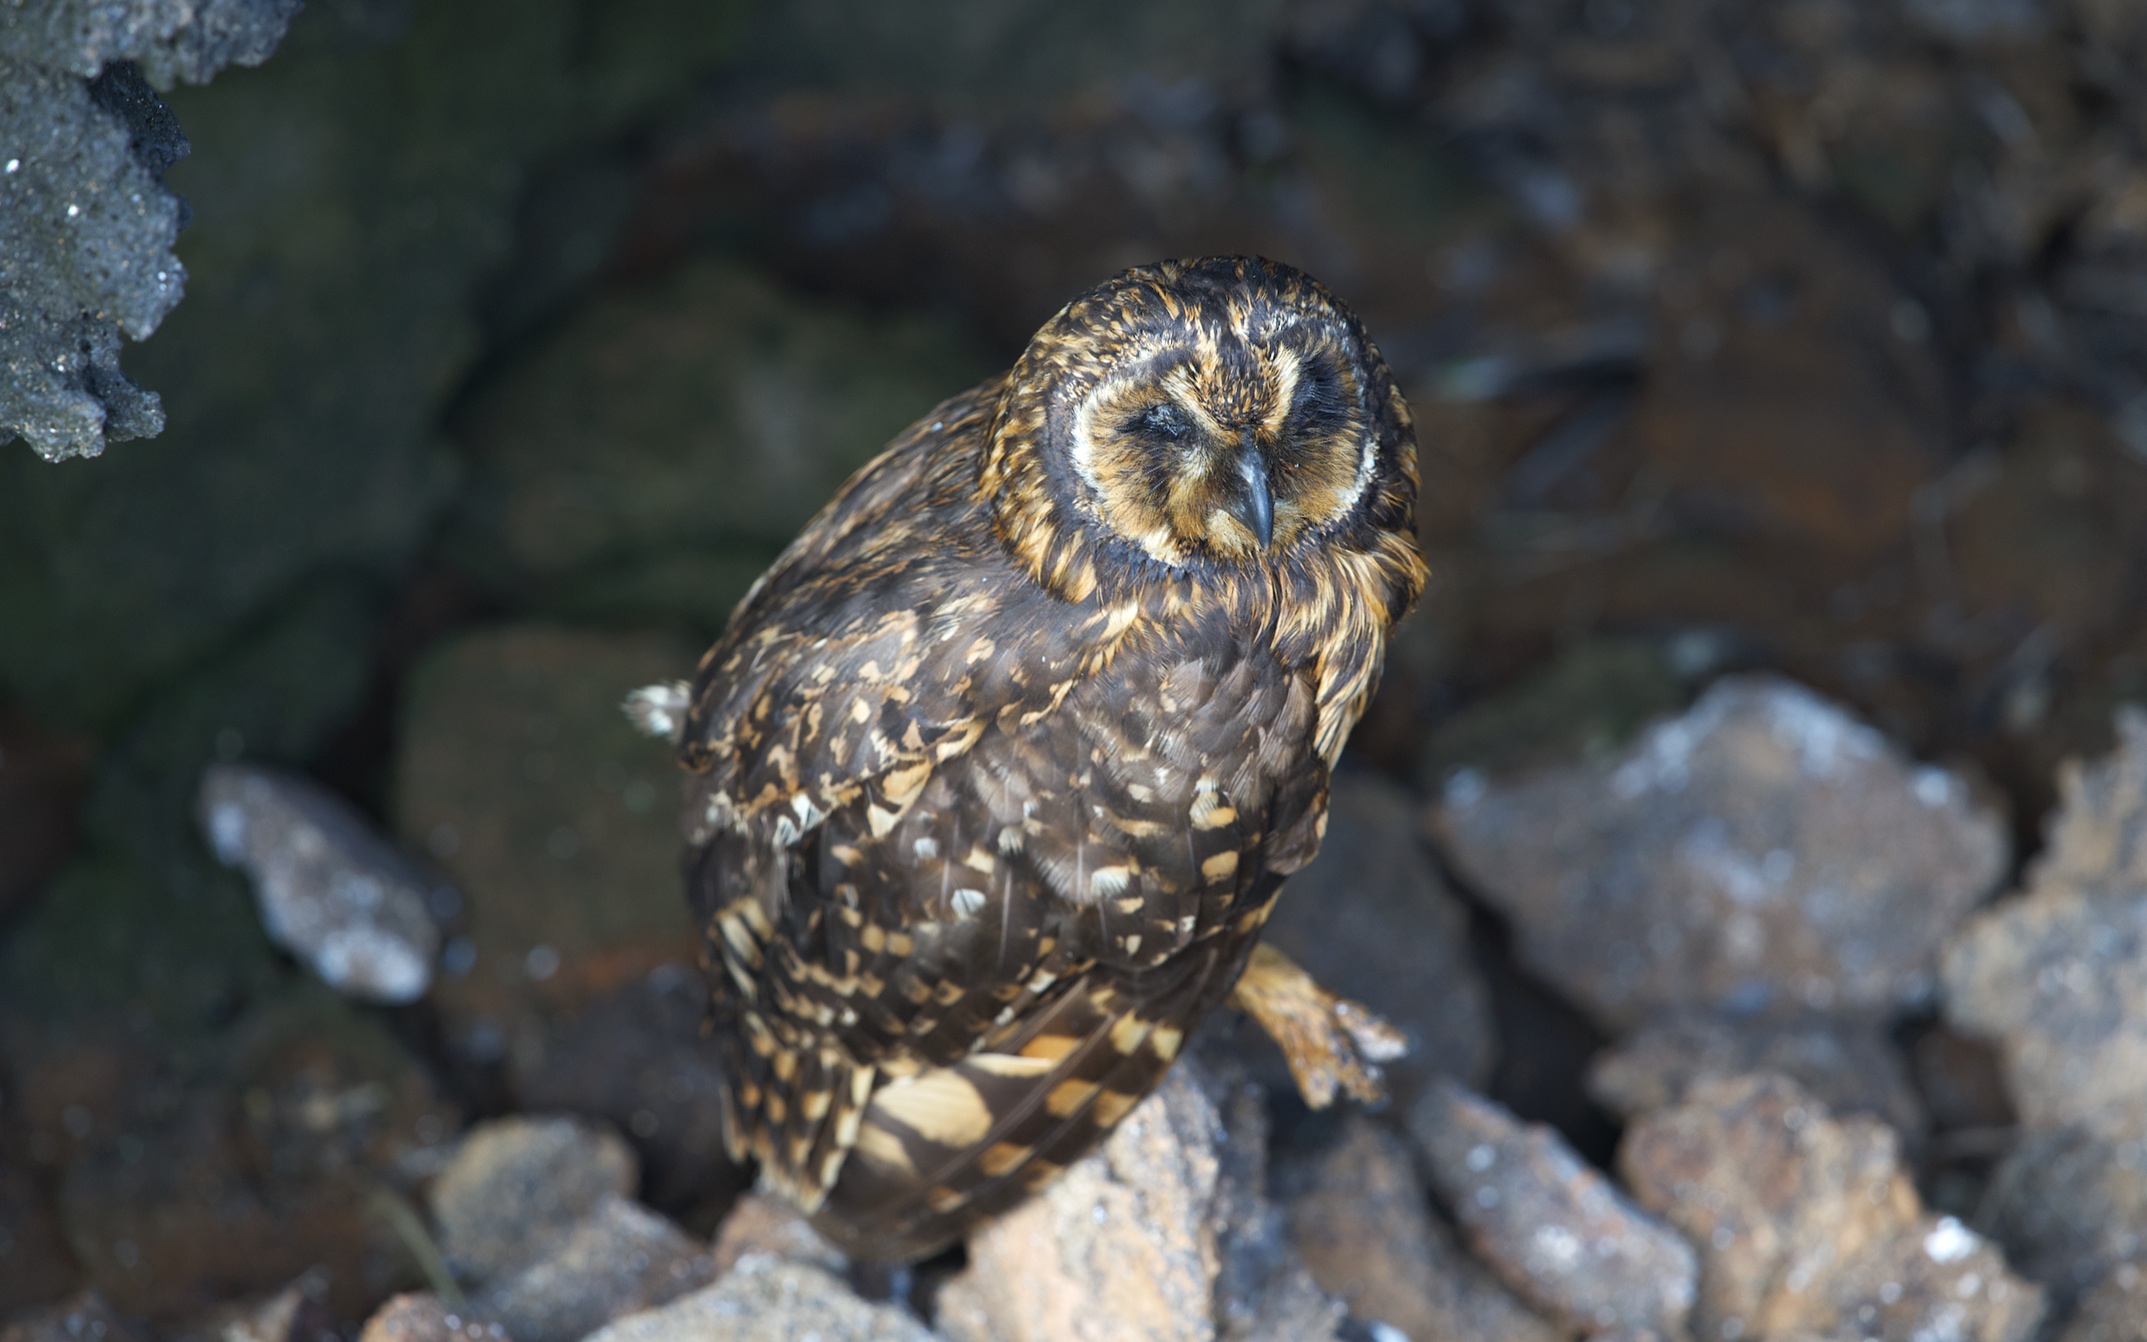  …..like this beautiful owl.  